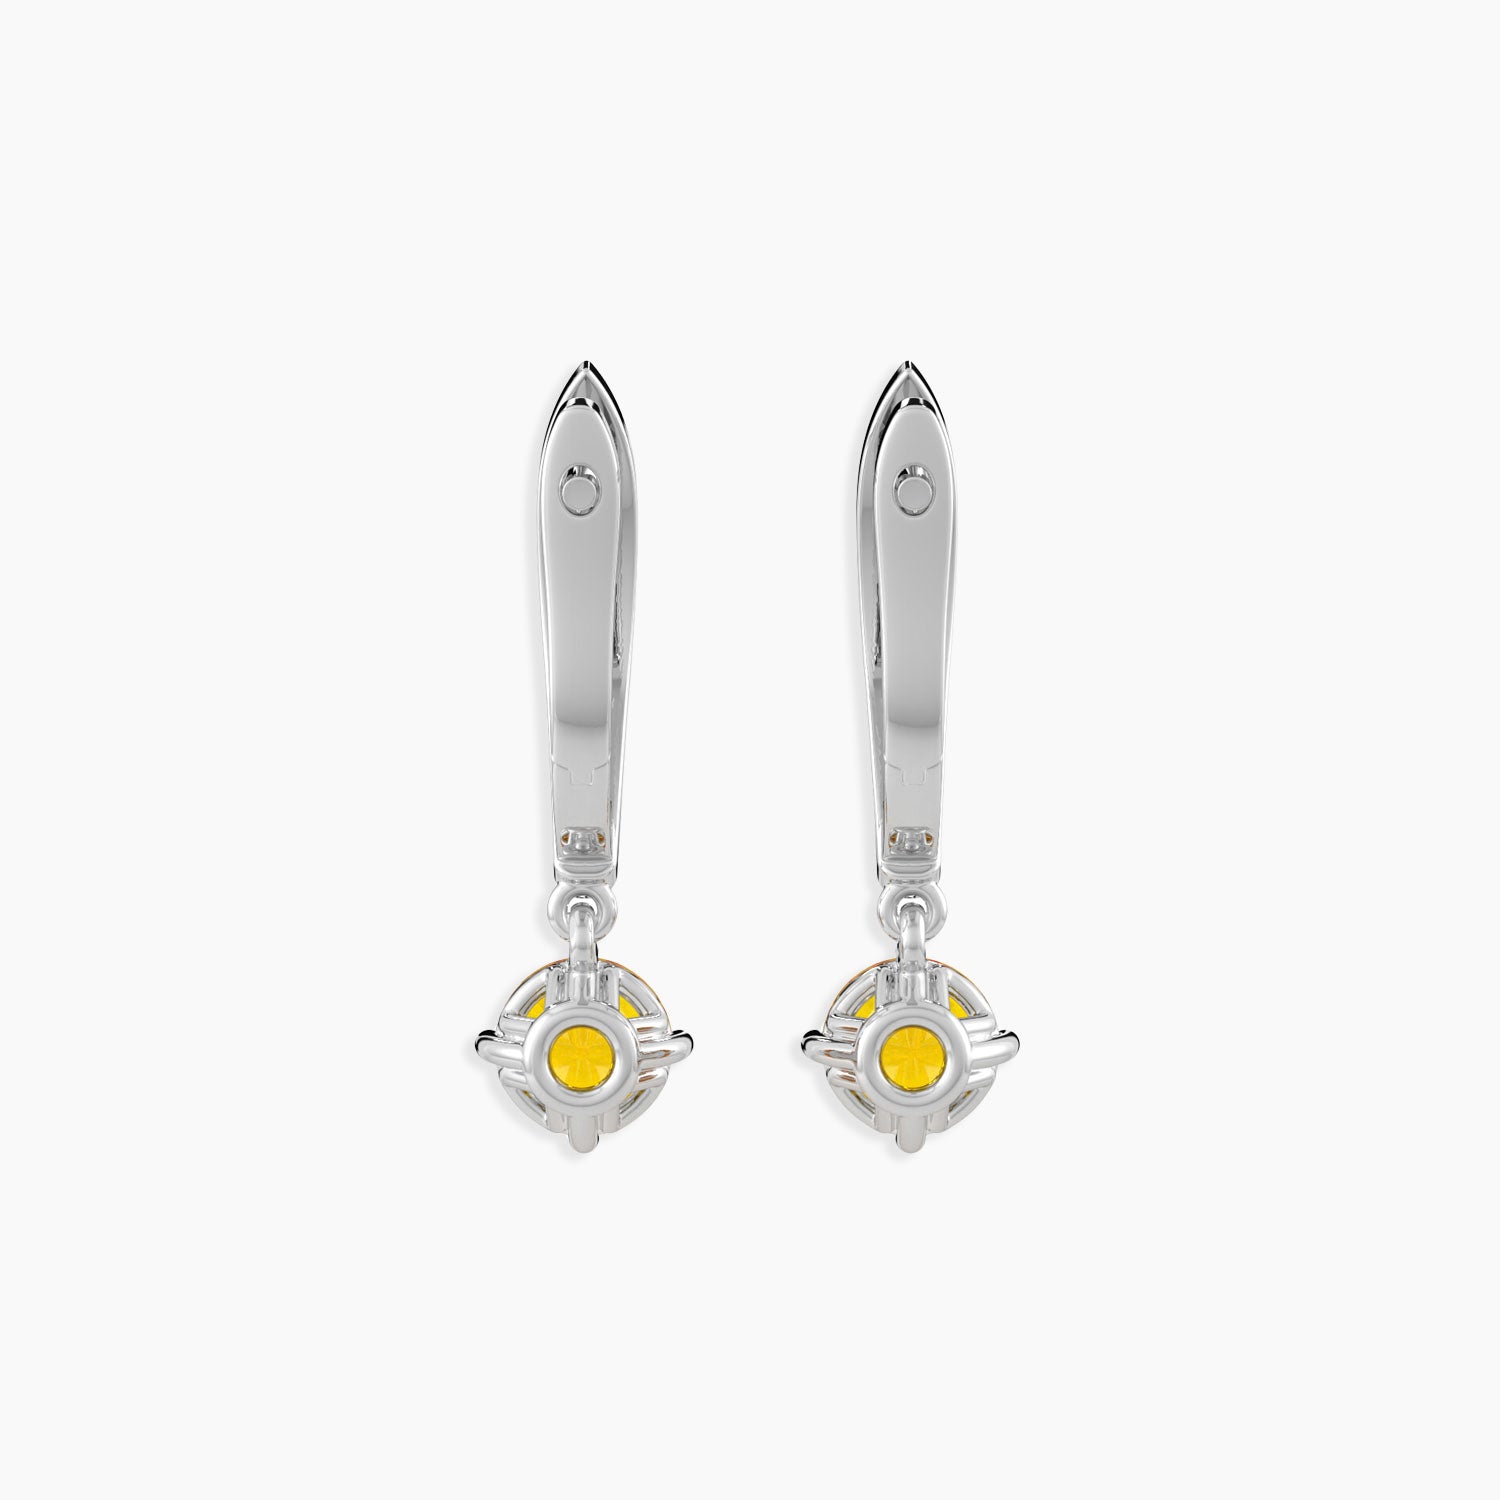 Sterling Silver Citrine Earrings - Elegant Jewelry with Dangling Citrine Gemstones